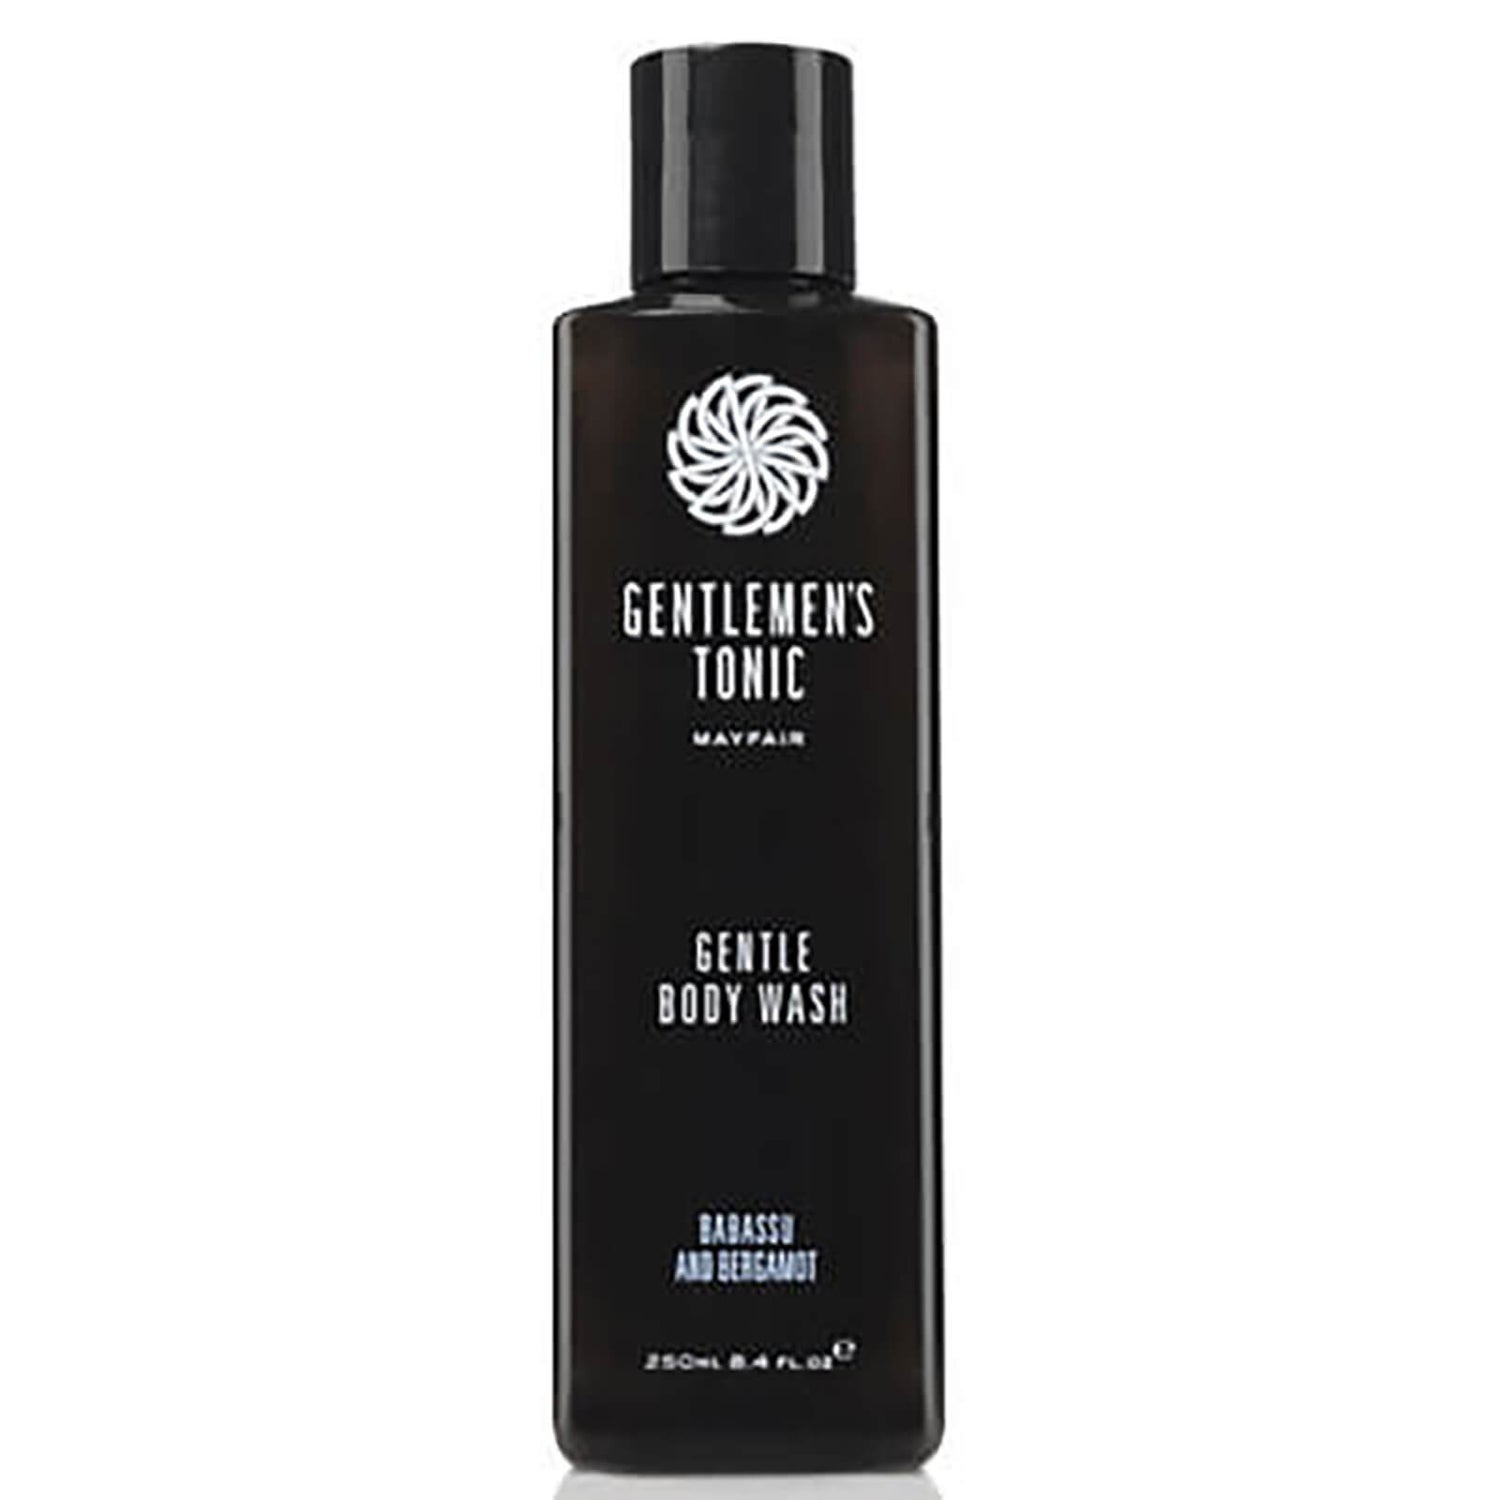 Гель для душа Gentlemen's Tonic Gentle Body Wash (250 мл)